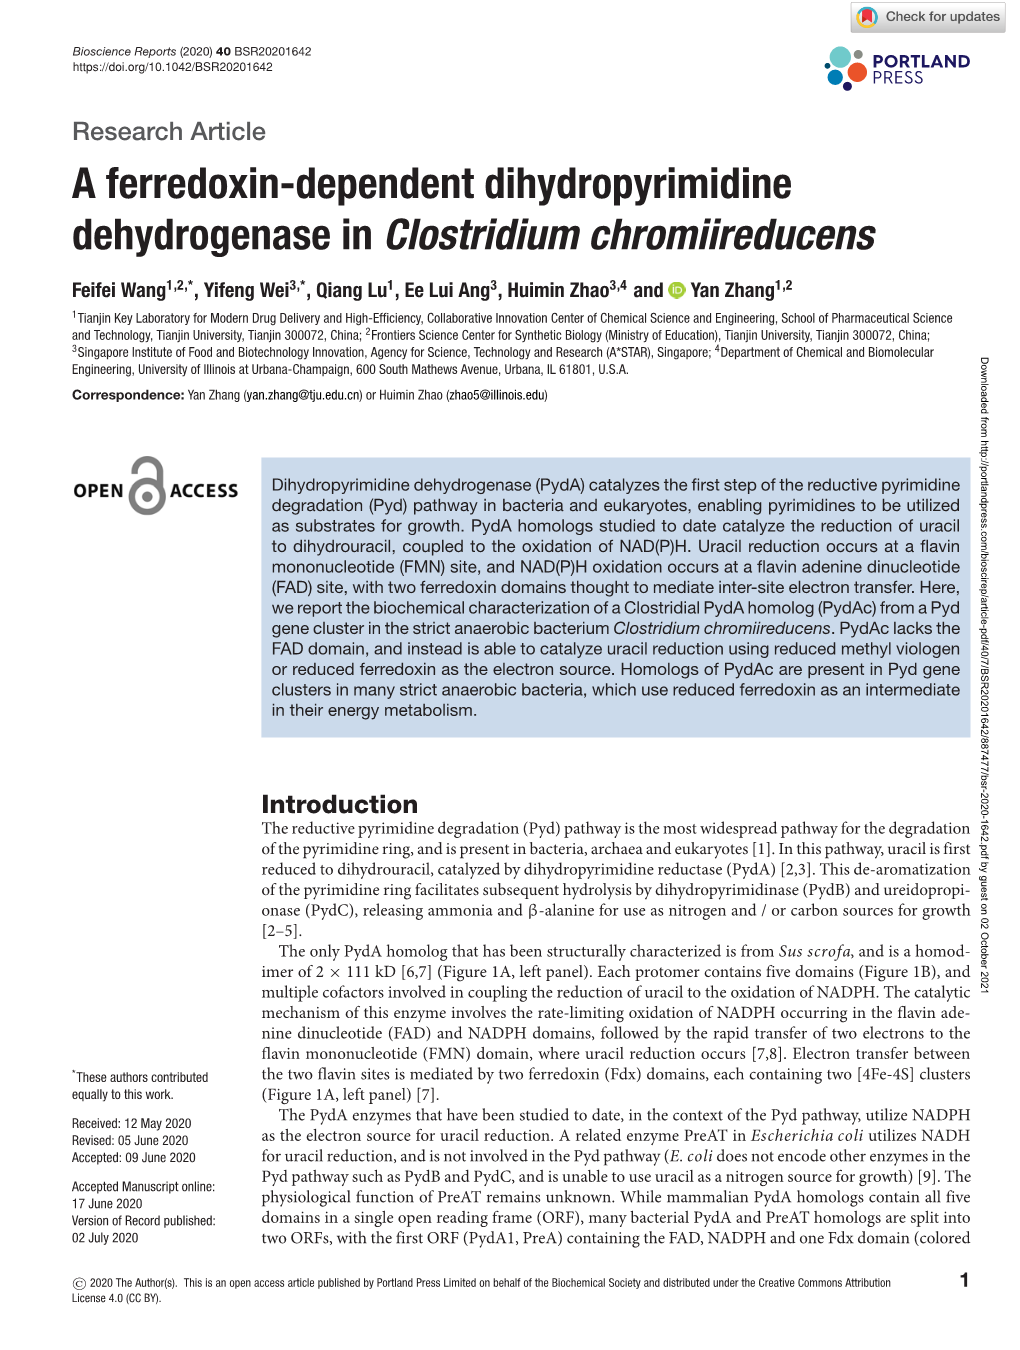 A Ferredoxin-Dependent Dihydropyrimidine Dehydrogenase in Clostridium Chromiireducens